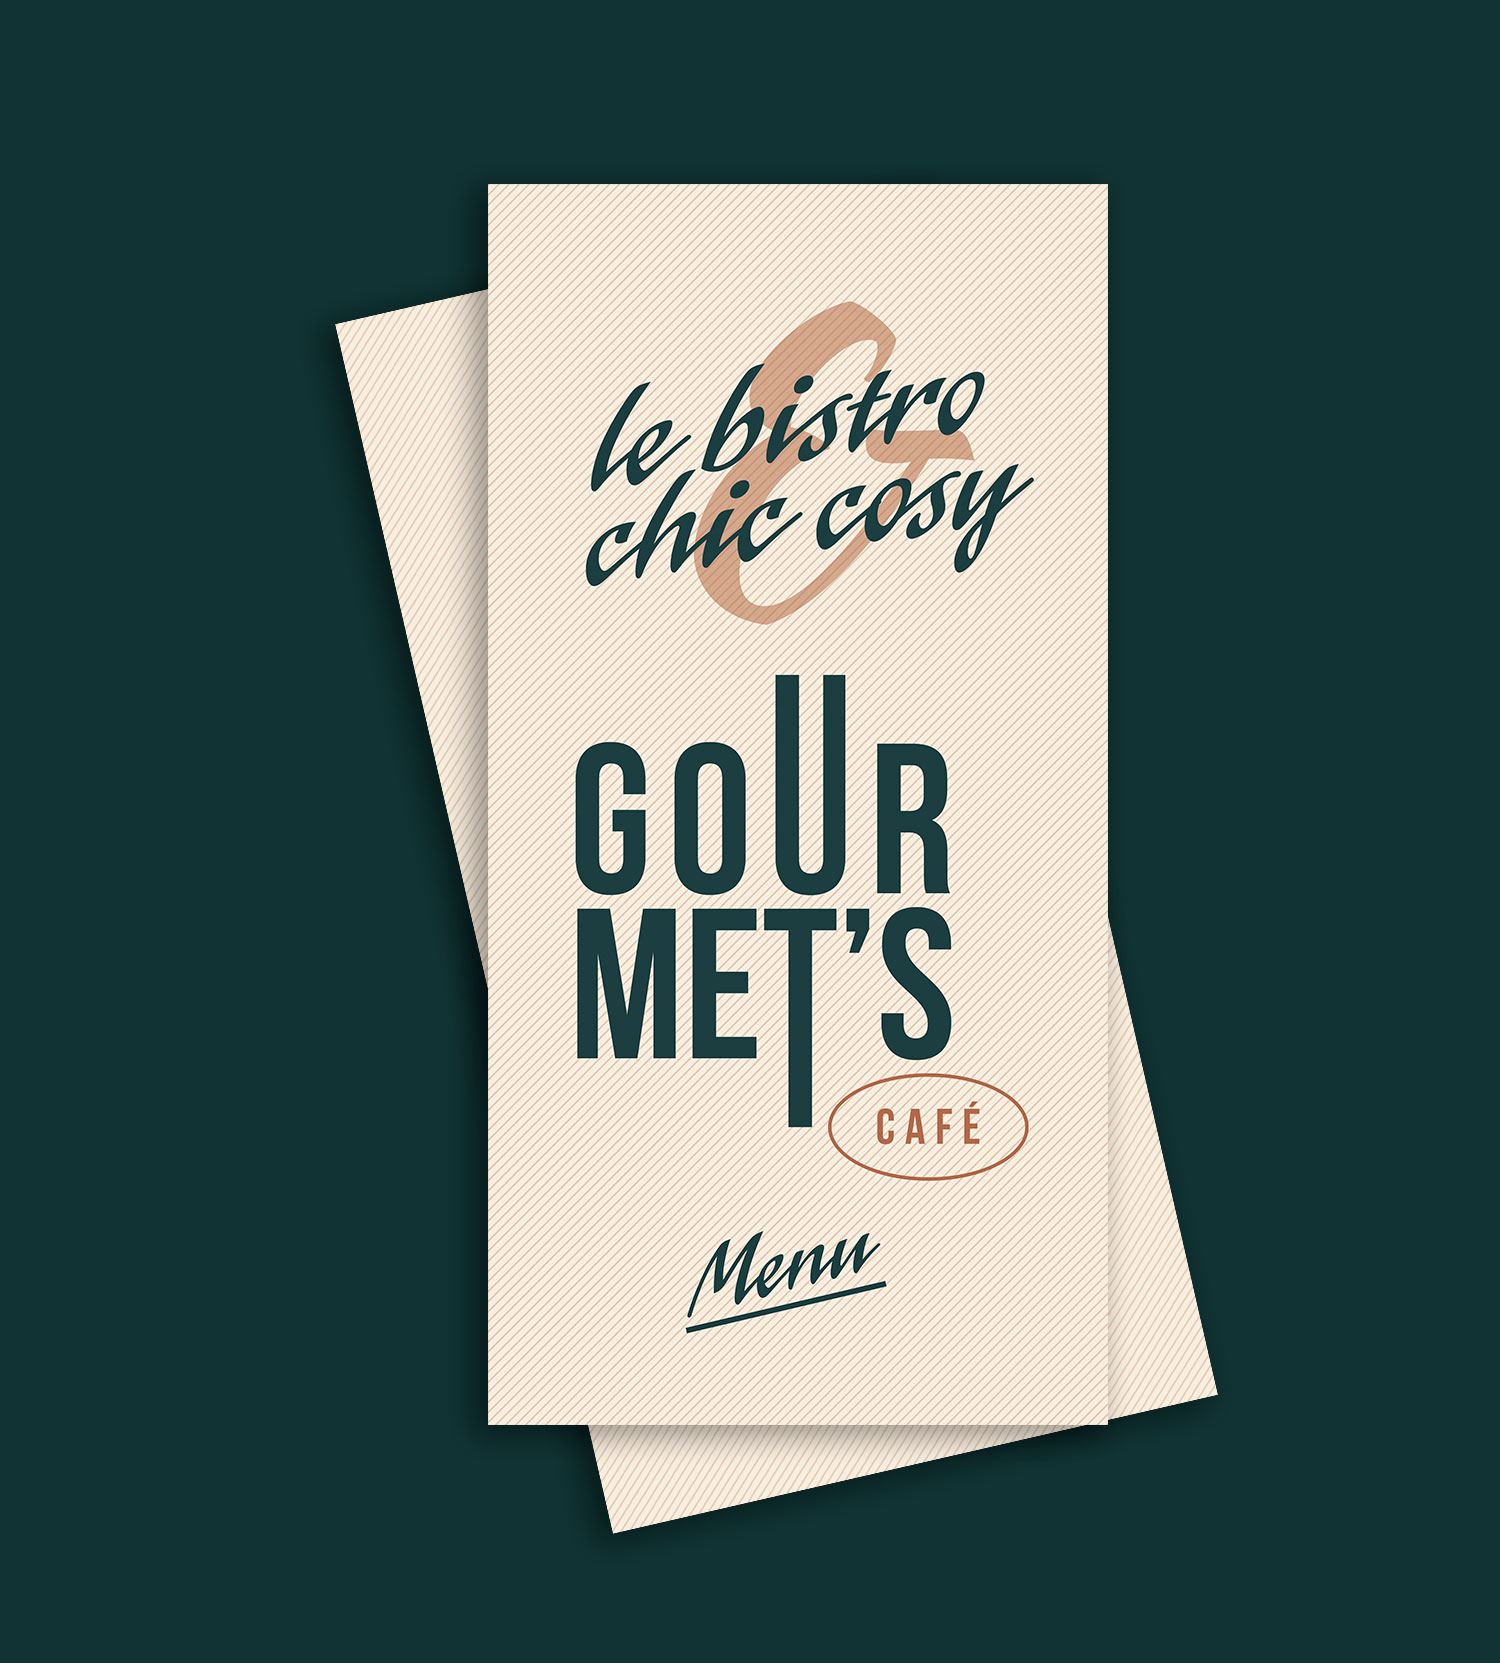 Menu brasserie Gourmets café graphiste Laetitia Costes